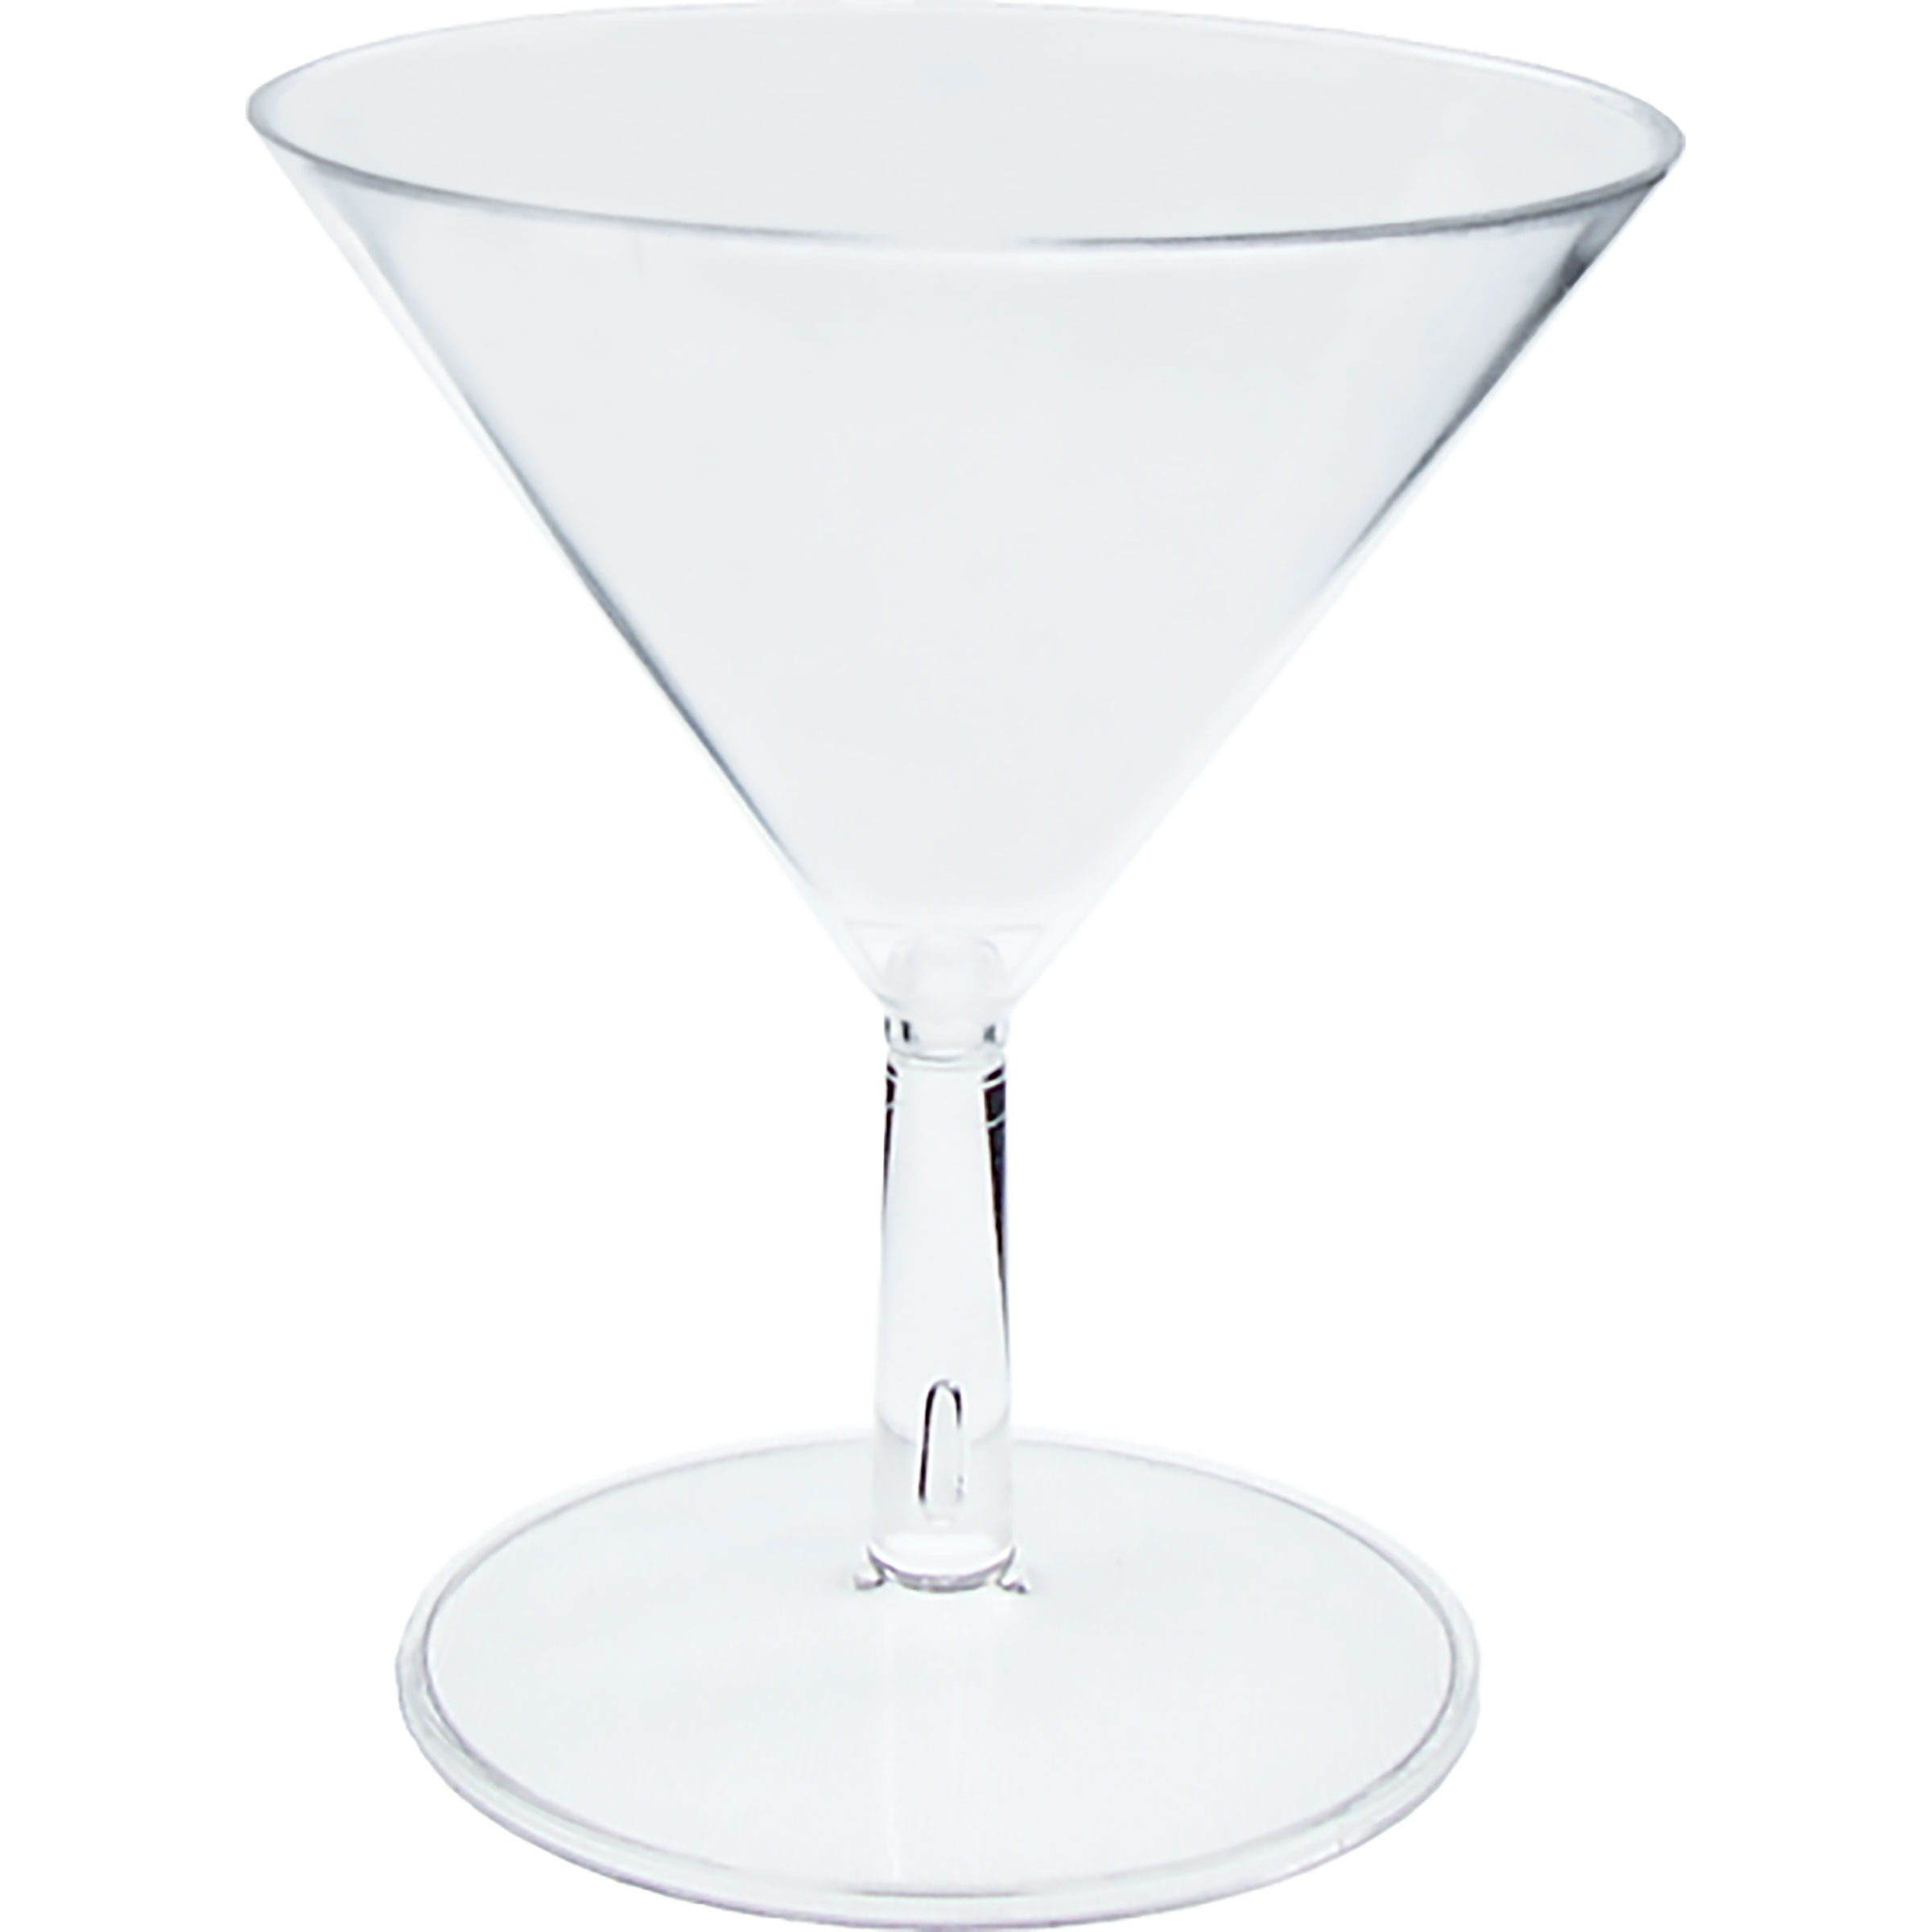 https://belusaweb.s3.amazonaws.com/product-images/designlab/2-oz-martini-shot-glasses-hwmt200-clear1602750297.jpg